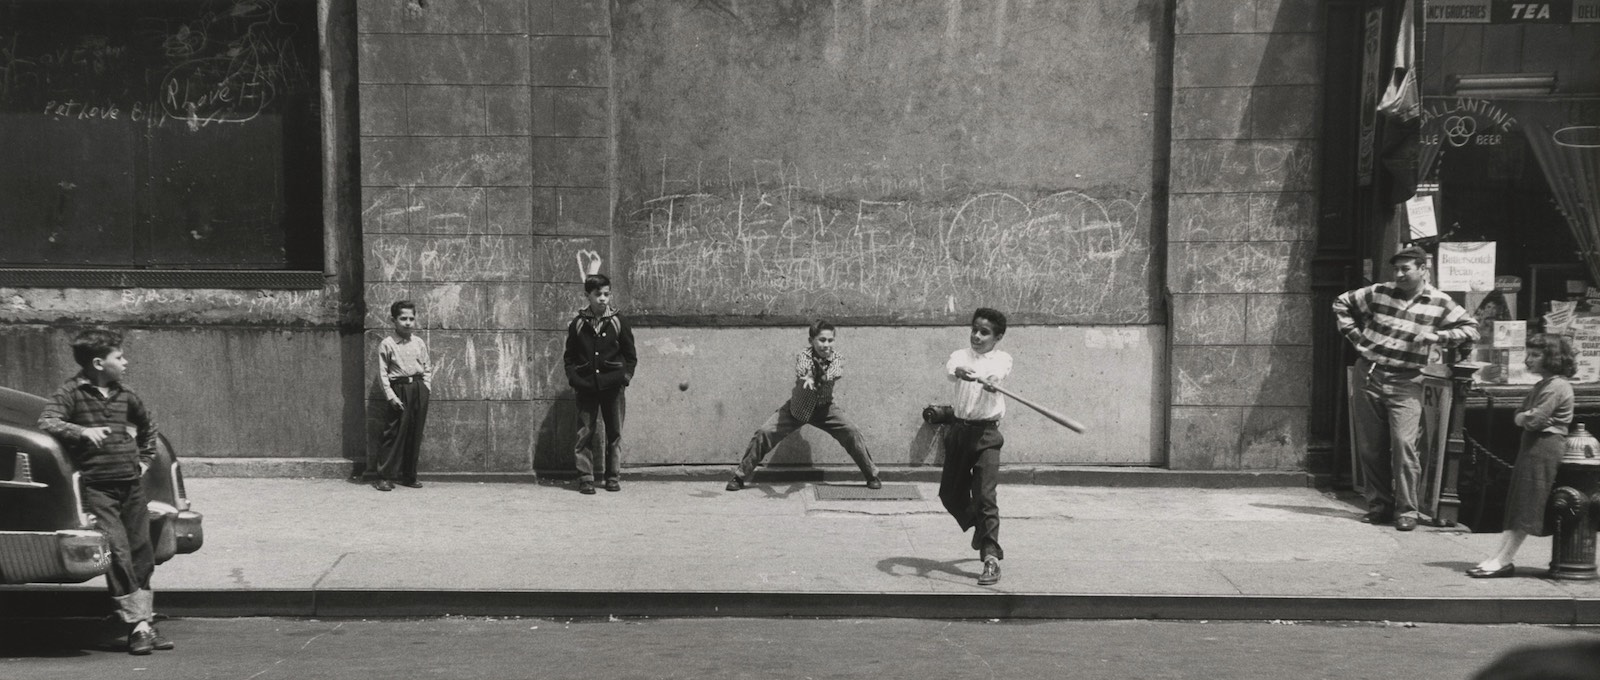 Children Playing Baseball in Street, New York, 1955